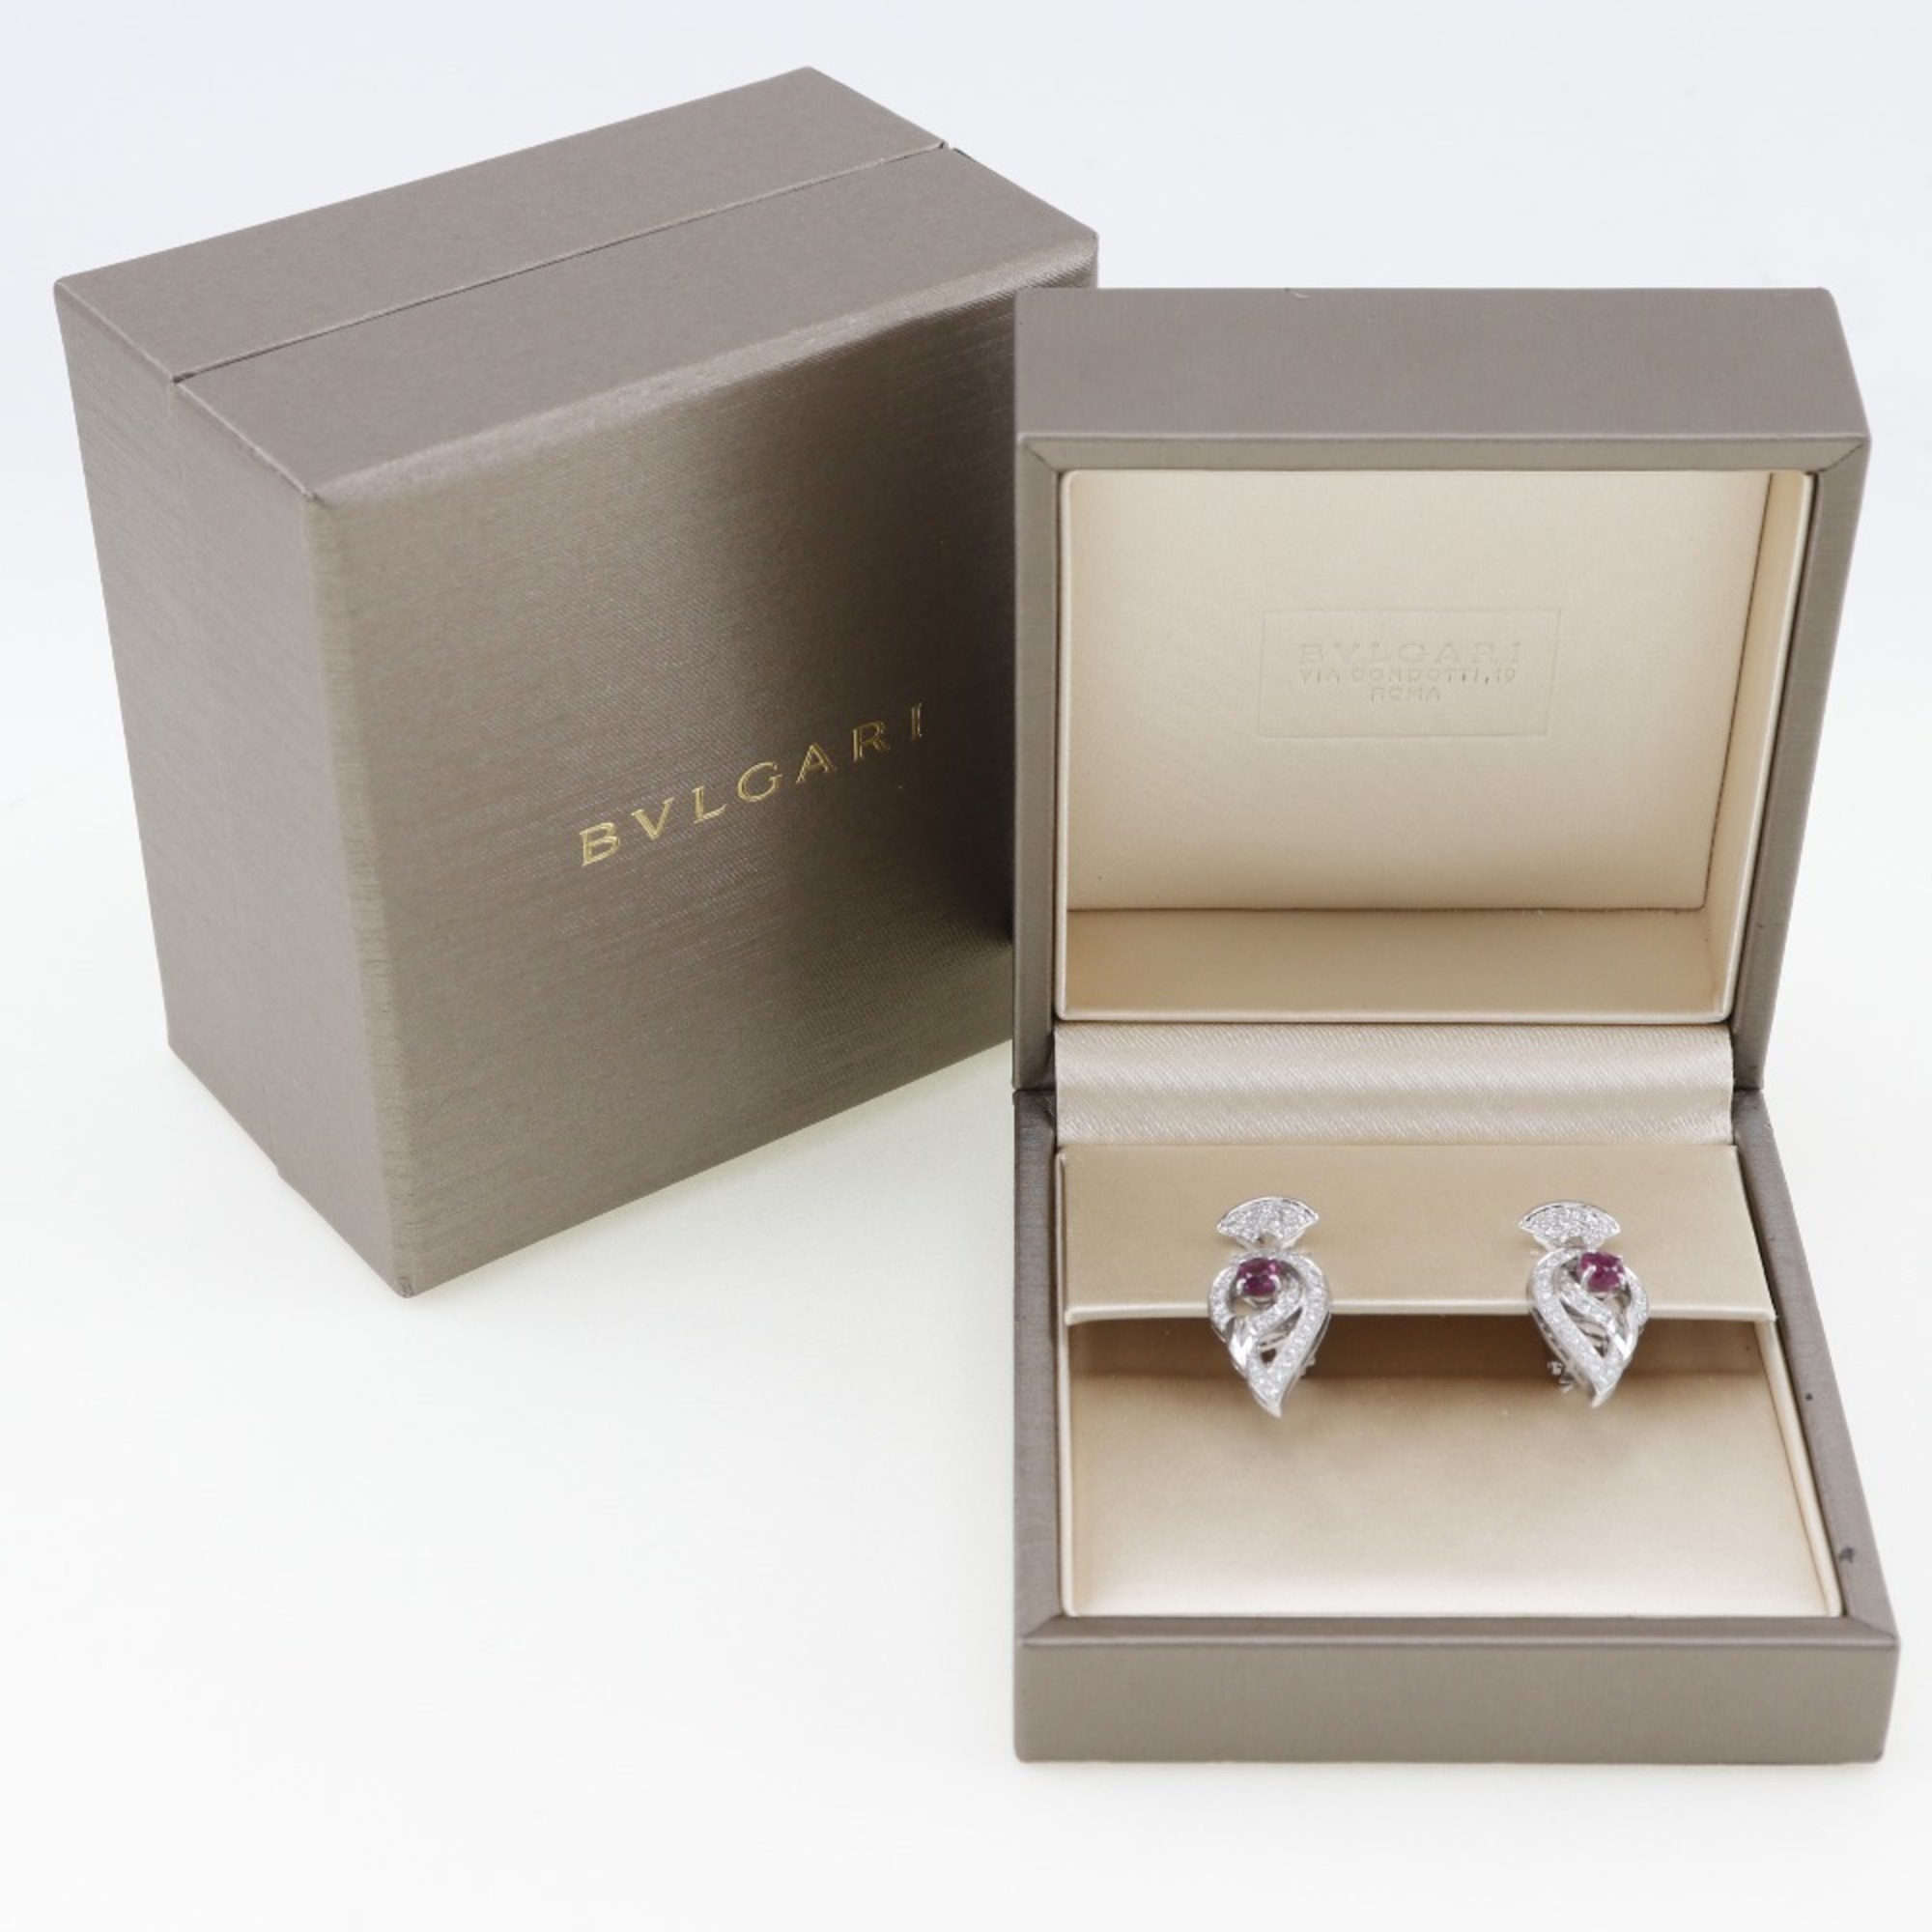 BVLGARI Diva Dream Earrings, 18K White Gold, Rubellite Tourmaline, Diamond, Approx. 14.4g, Dream, Women's, I120124049